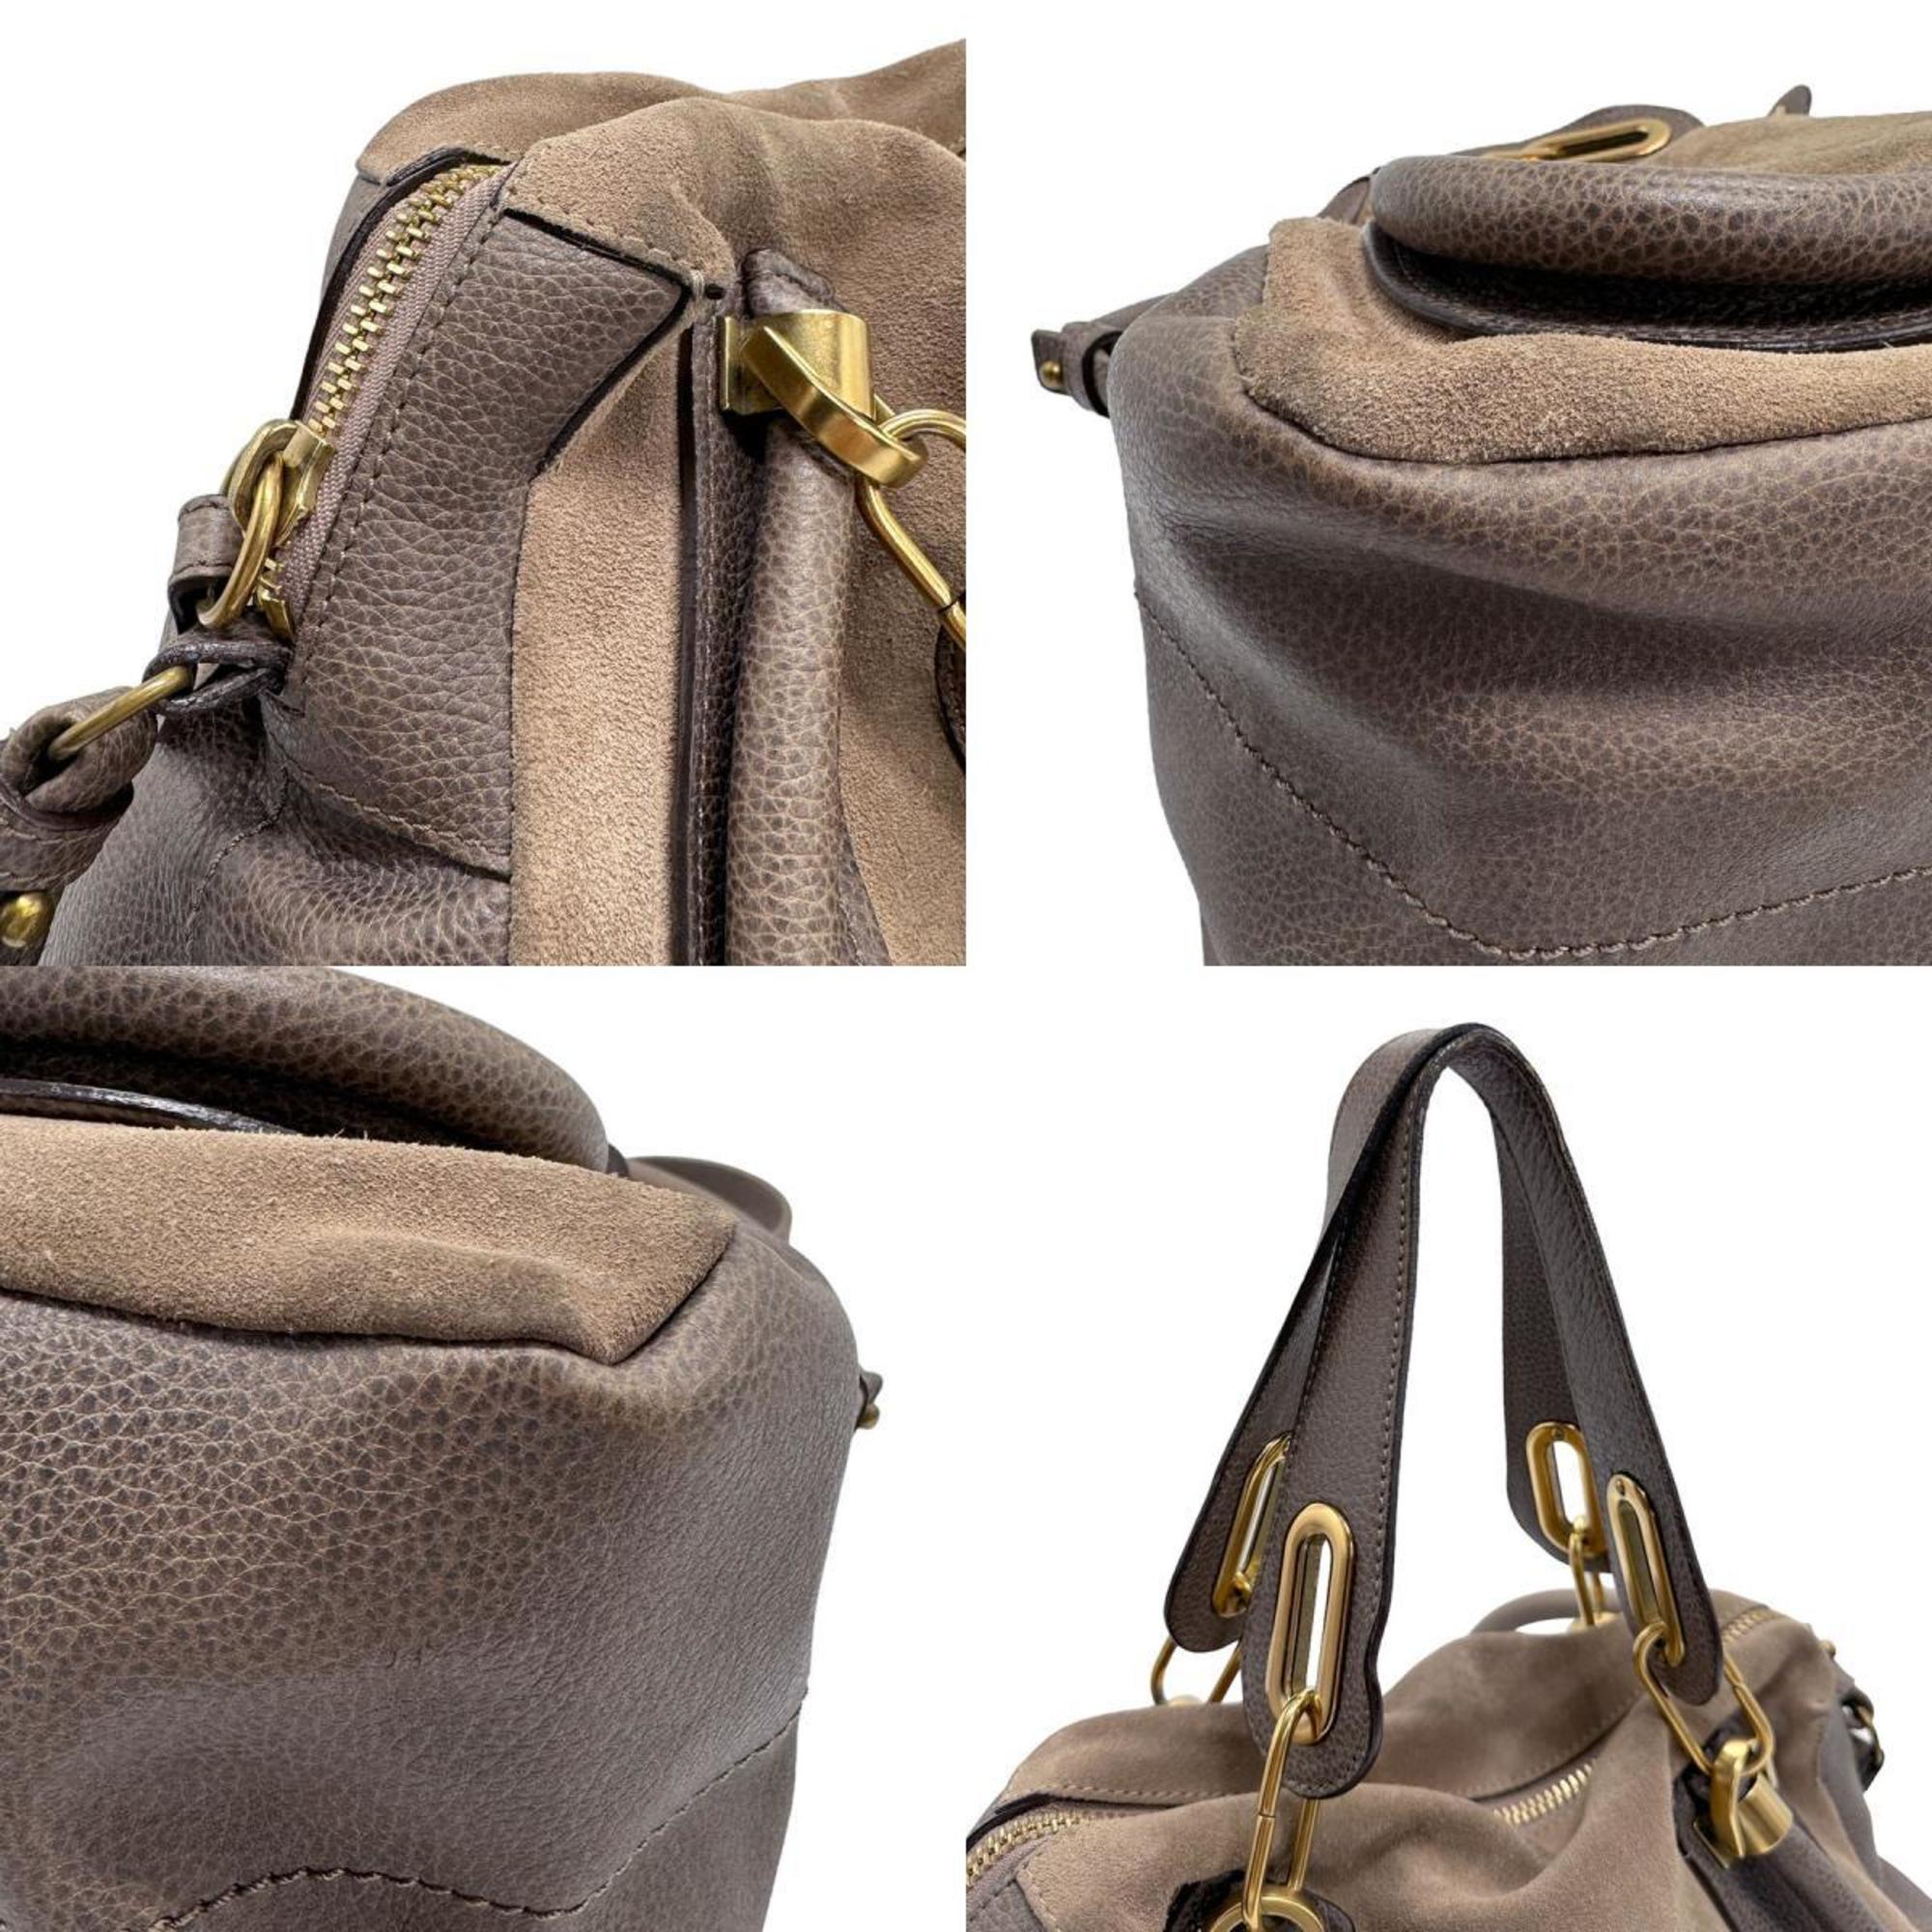 Chloé Chloe Shoulder Bag Handbag Paraty Suede Leather Brown Women's z1331